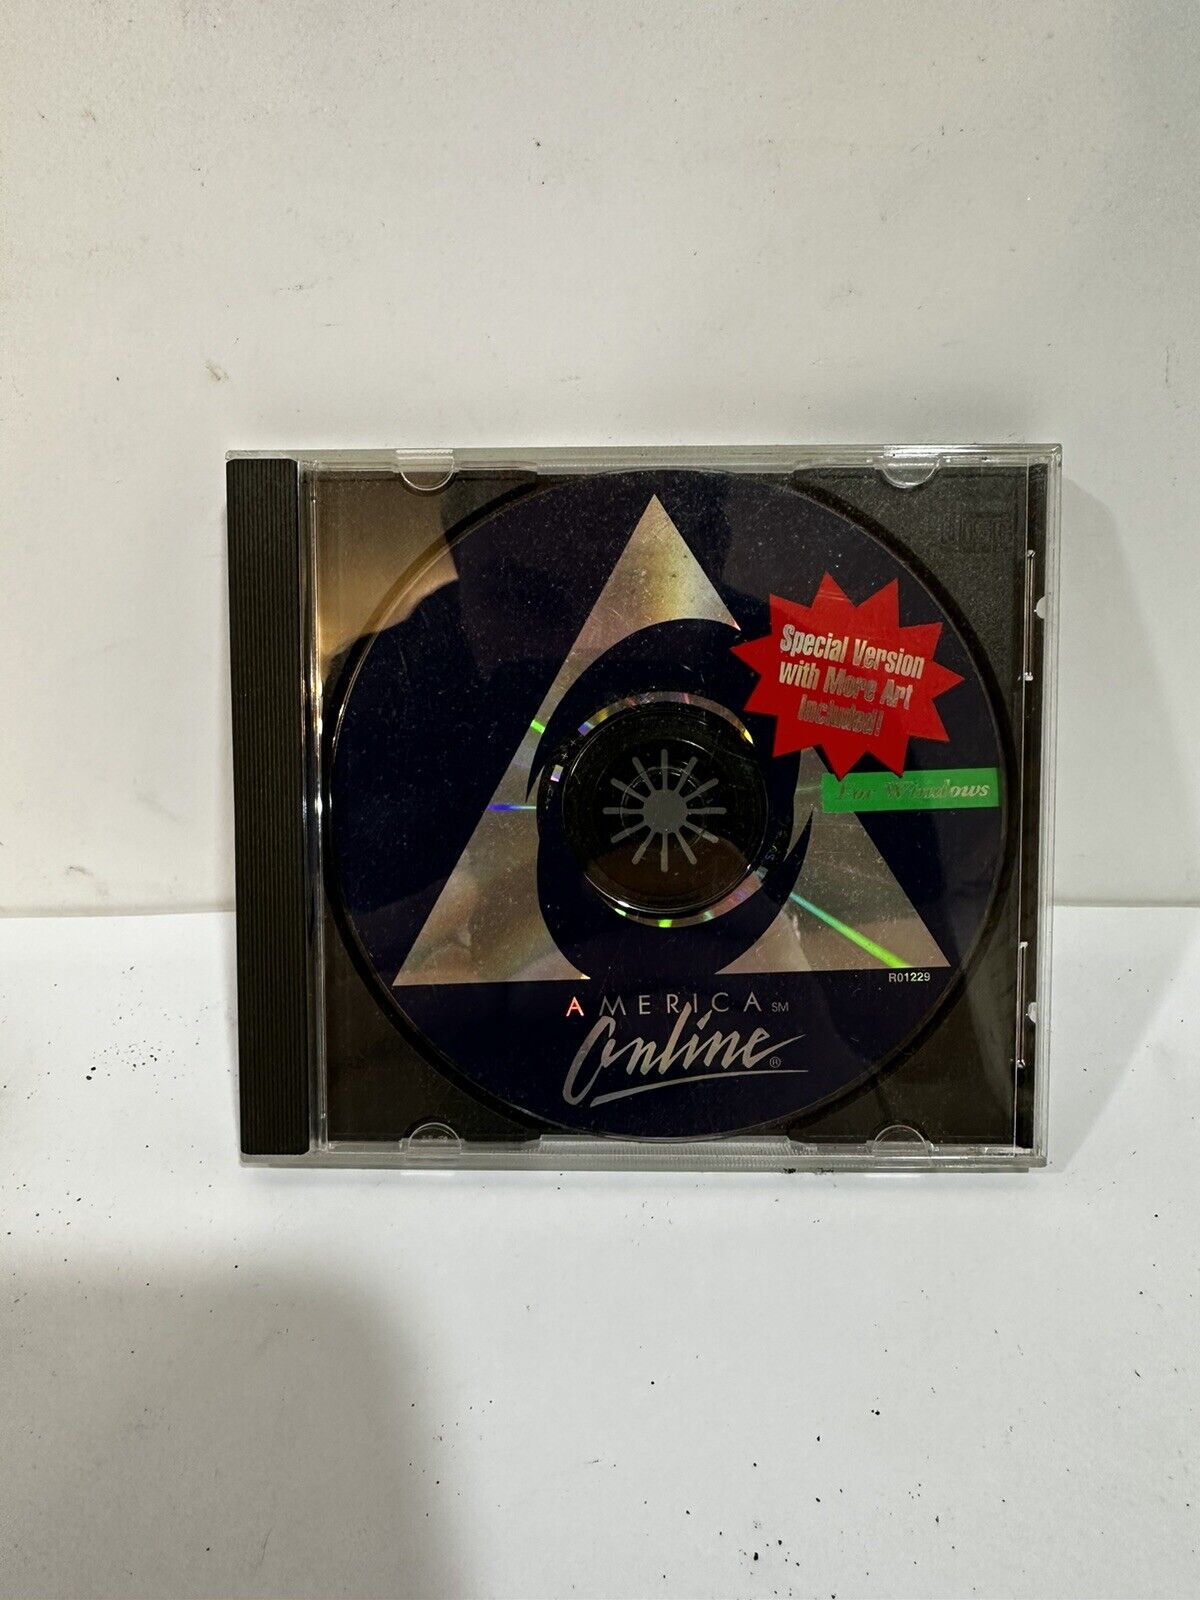 AOL America Online For Windows PC CD Rare Collectible R01229 Collectors